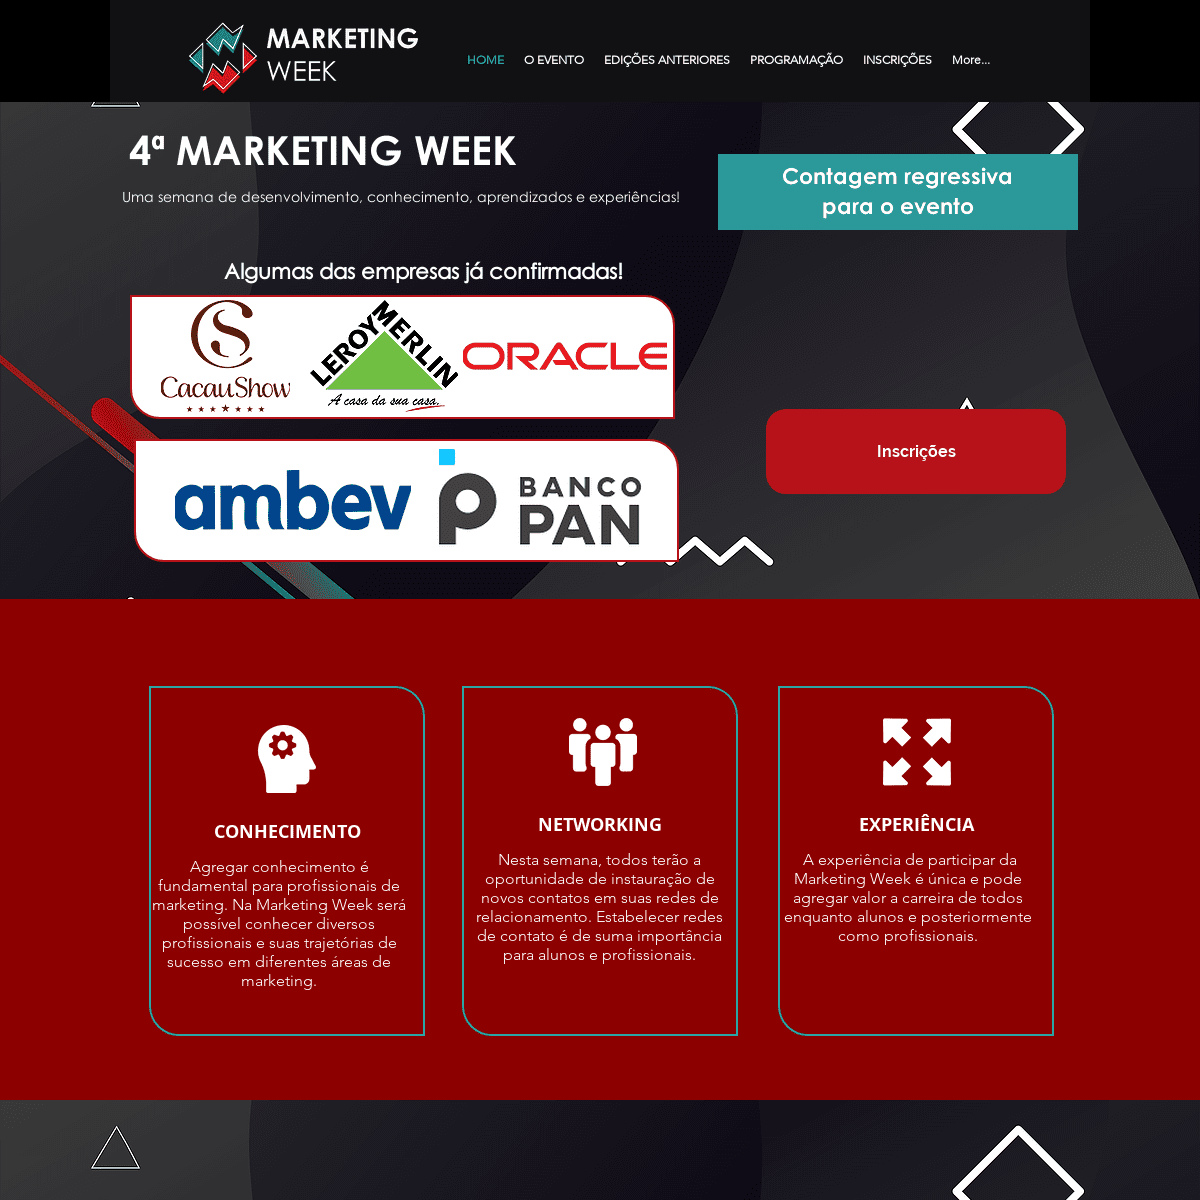 A complete backup of marketingweekusp.com.br